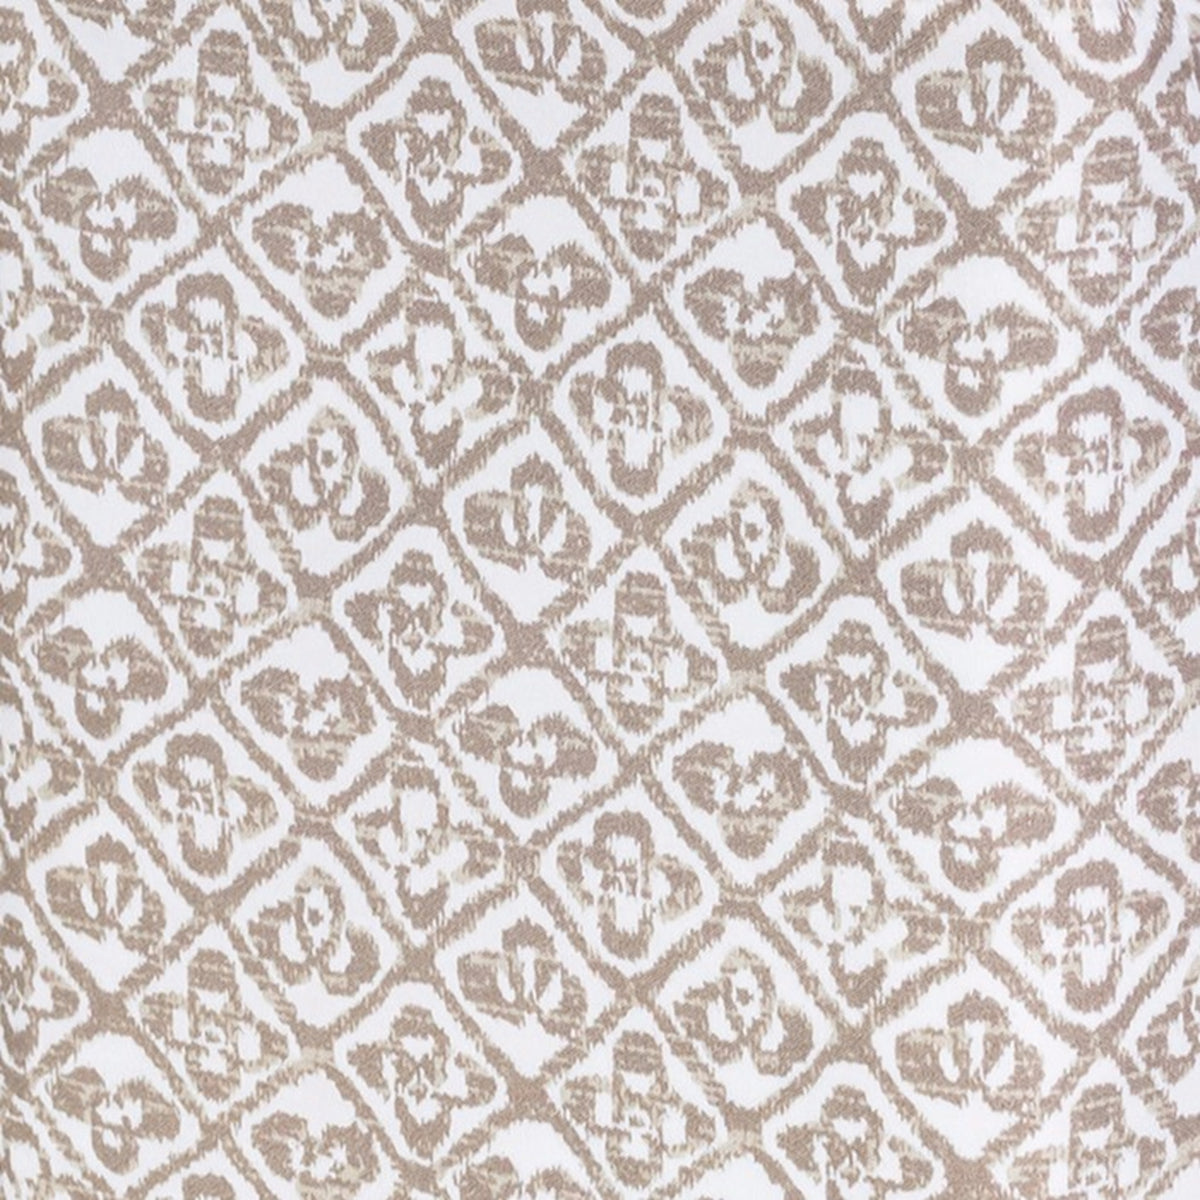 Swatch Sample of Matouk Catarina Tissue Box Cover in Dune Color